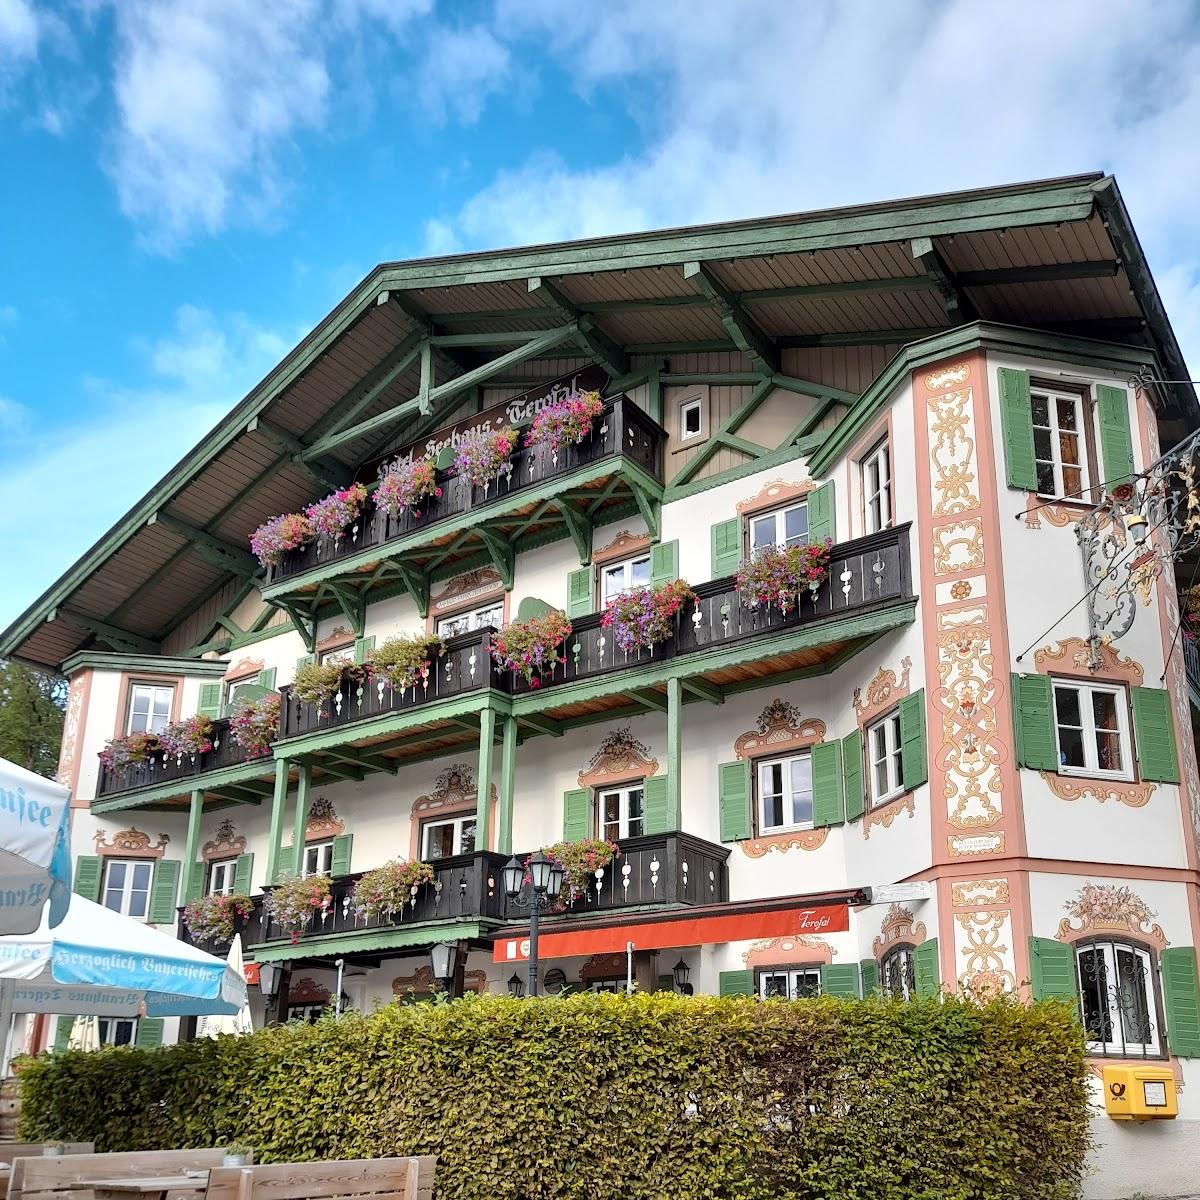 Restaurant "Hotel Terofal" in Schliersee